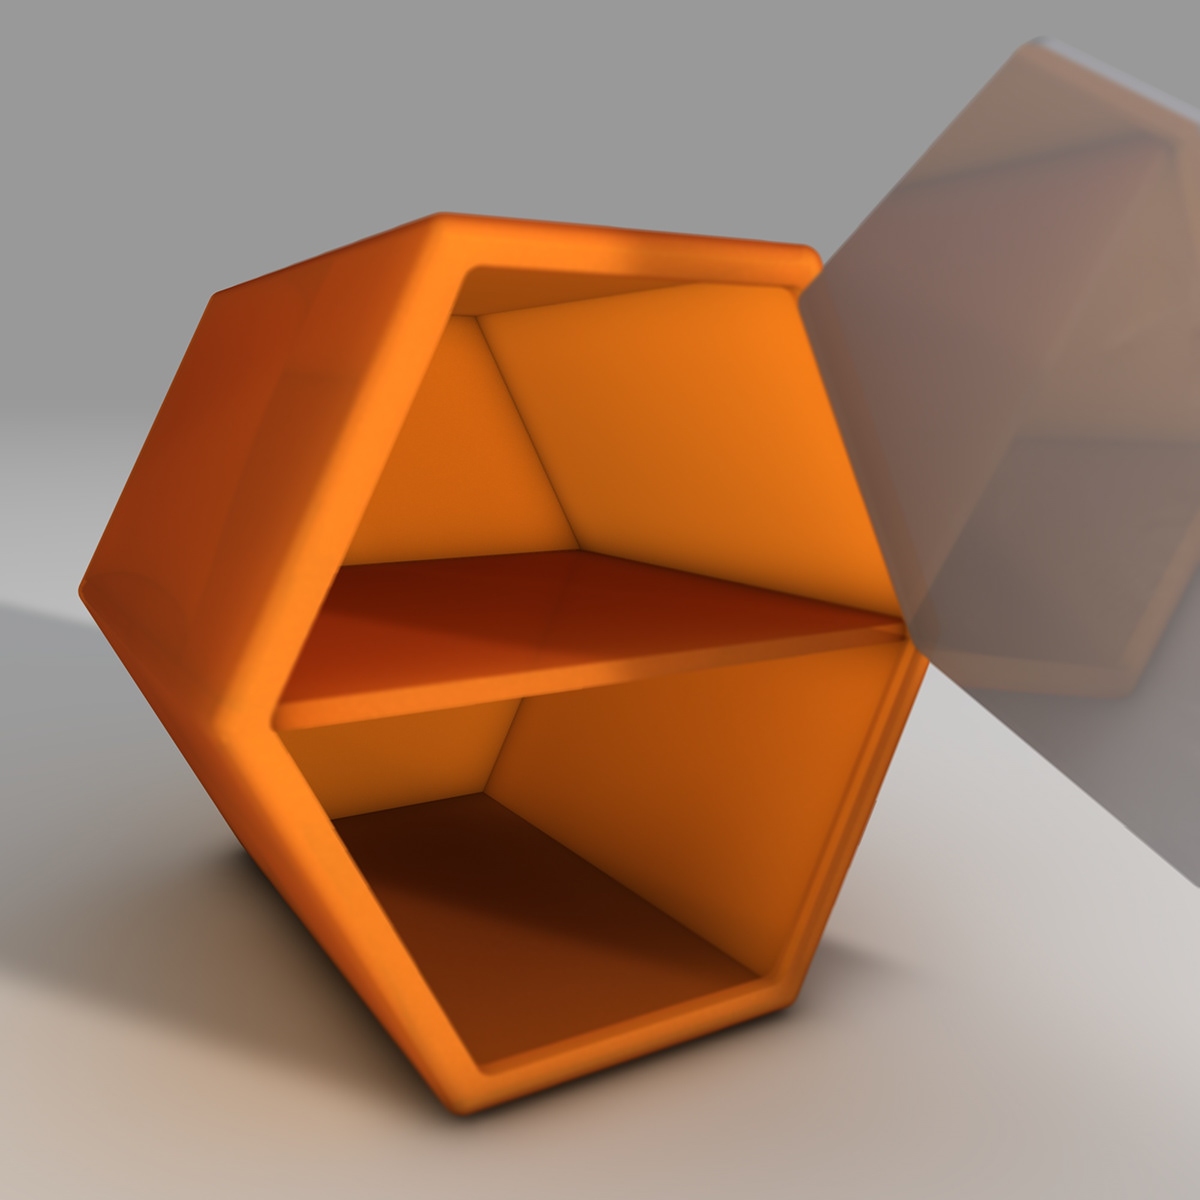 module hexagon color Assemble indoor furniture shape Space 